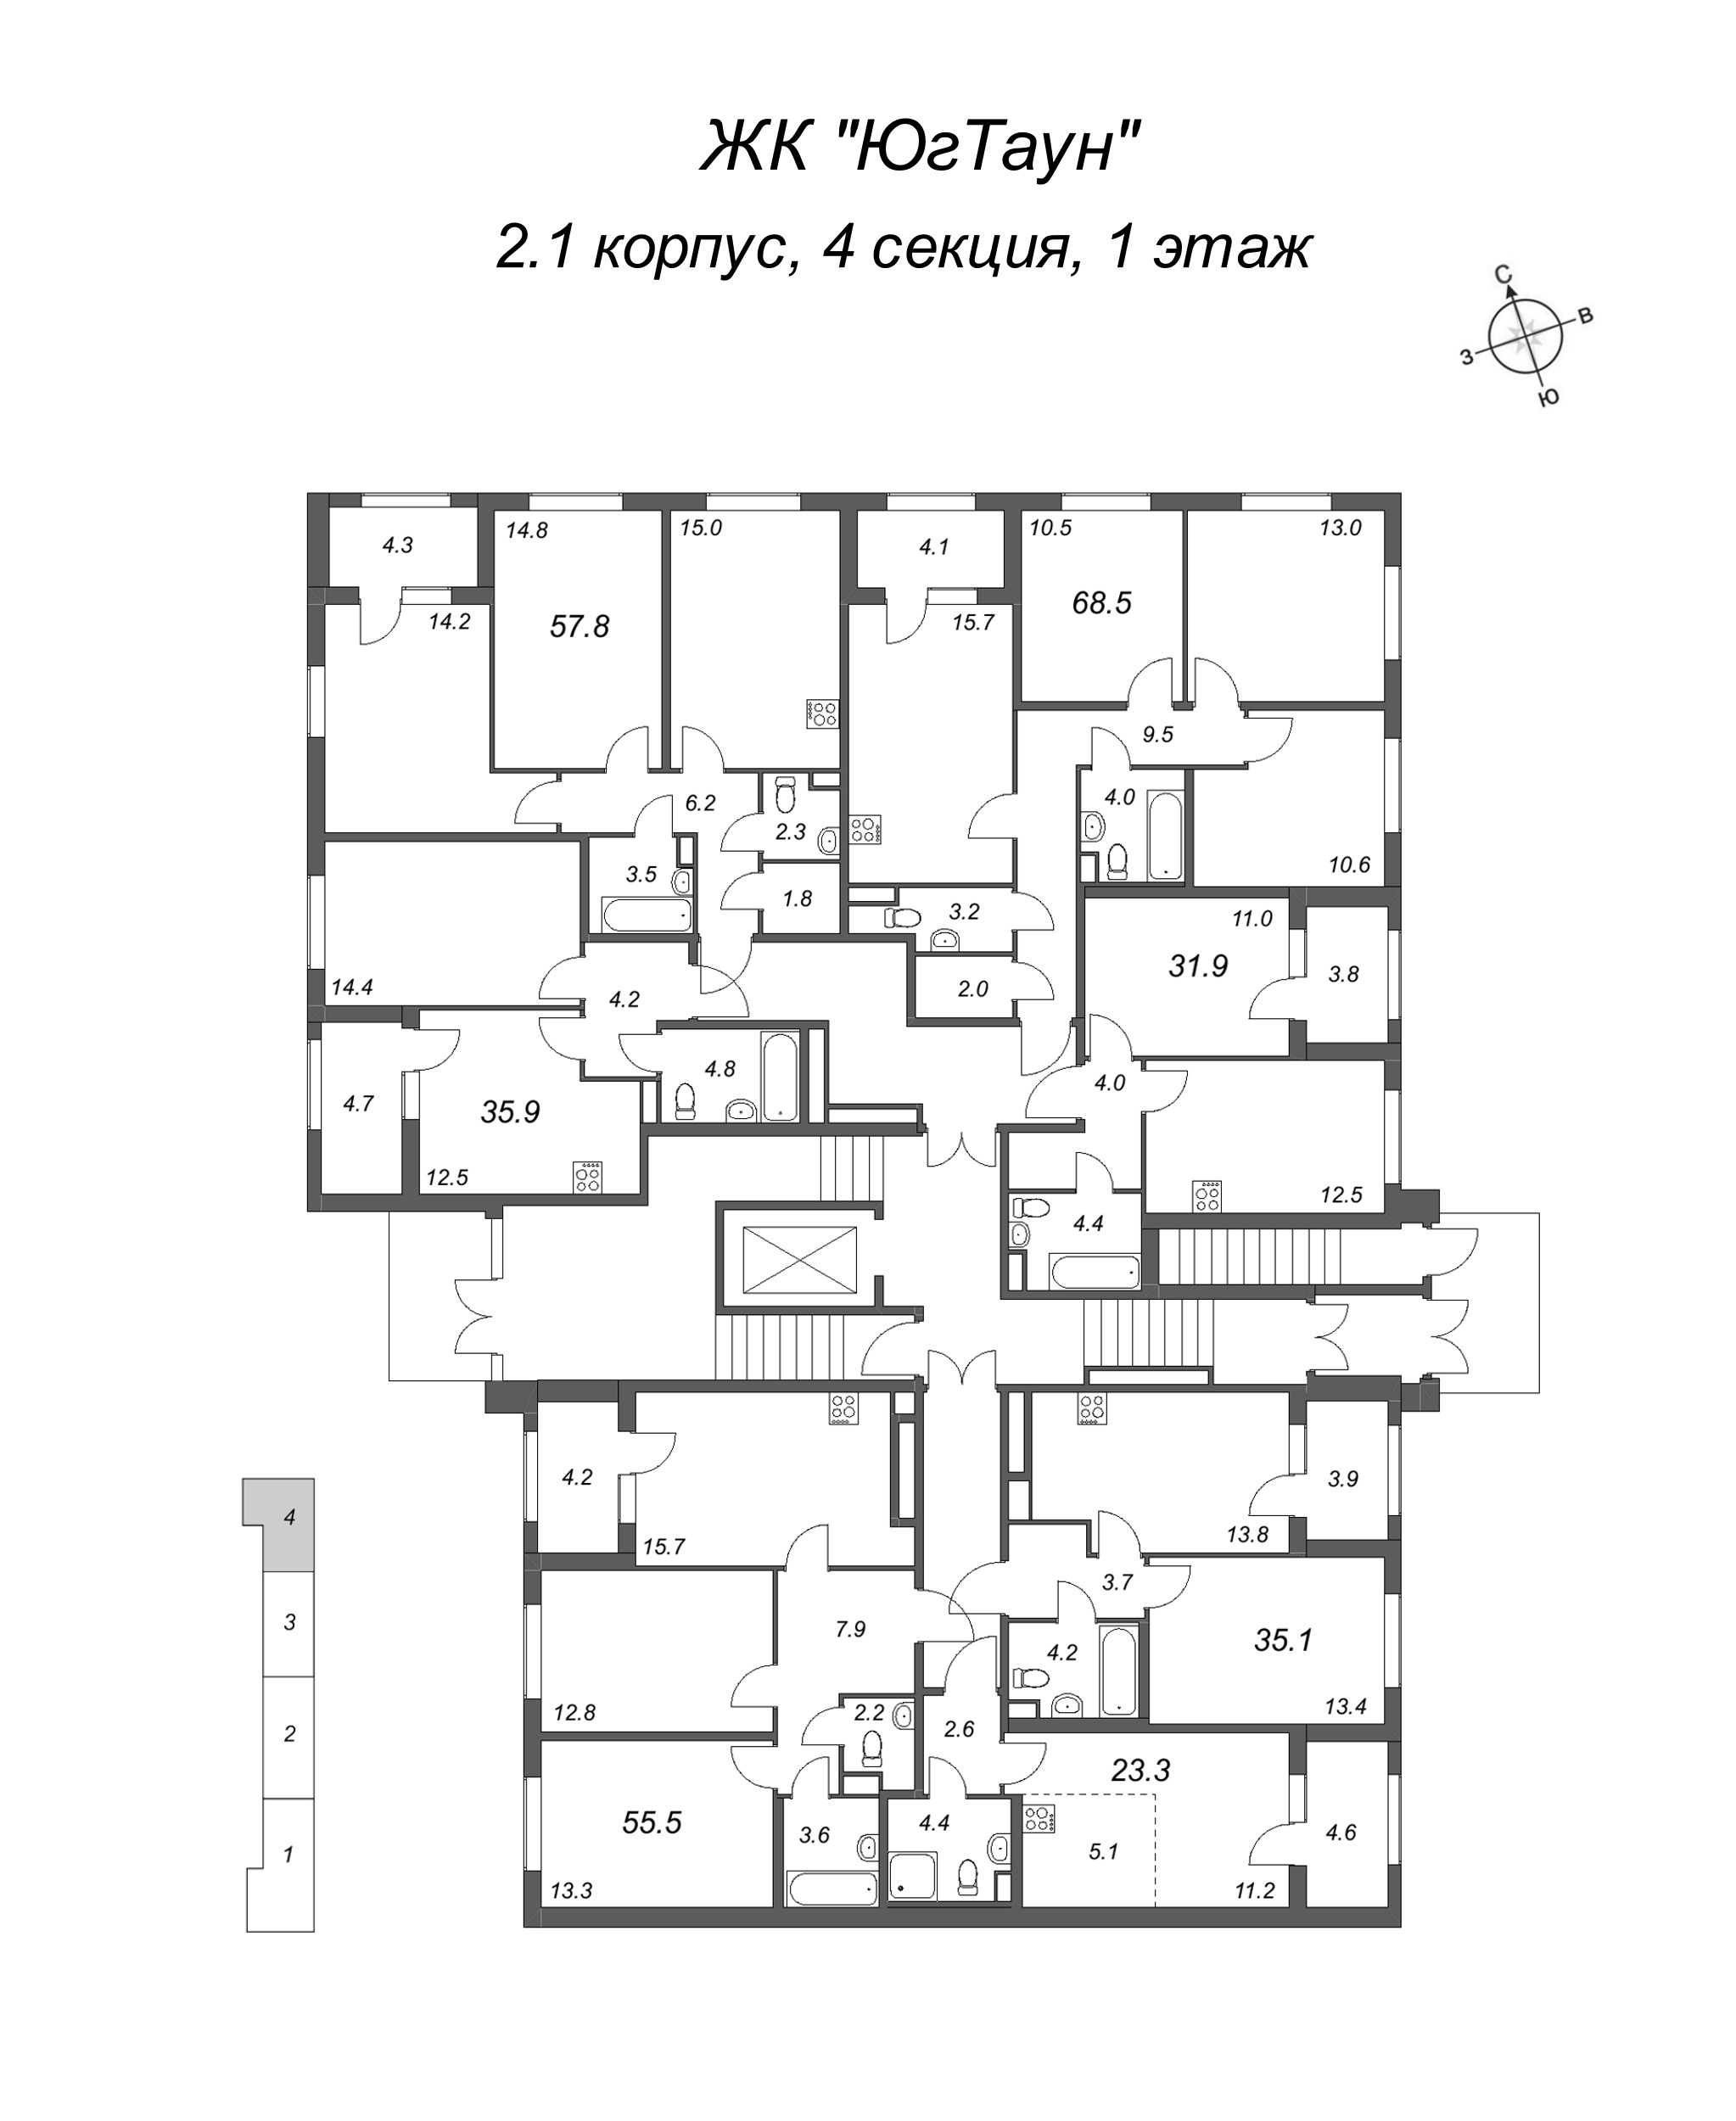 4-комнатная (Евро) квартира, 68.5 м² - планировка этажа